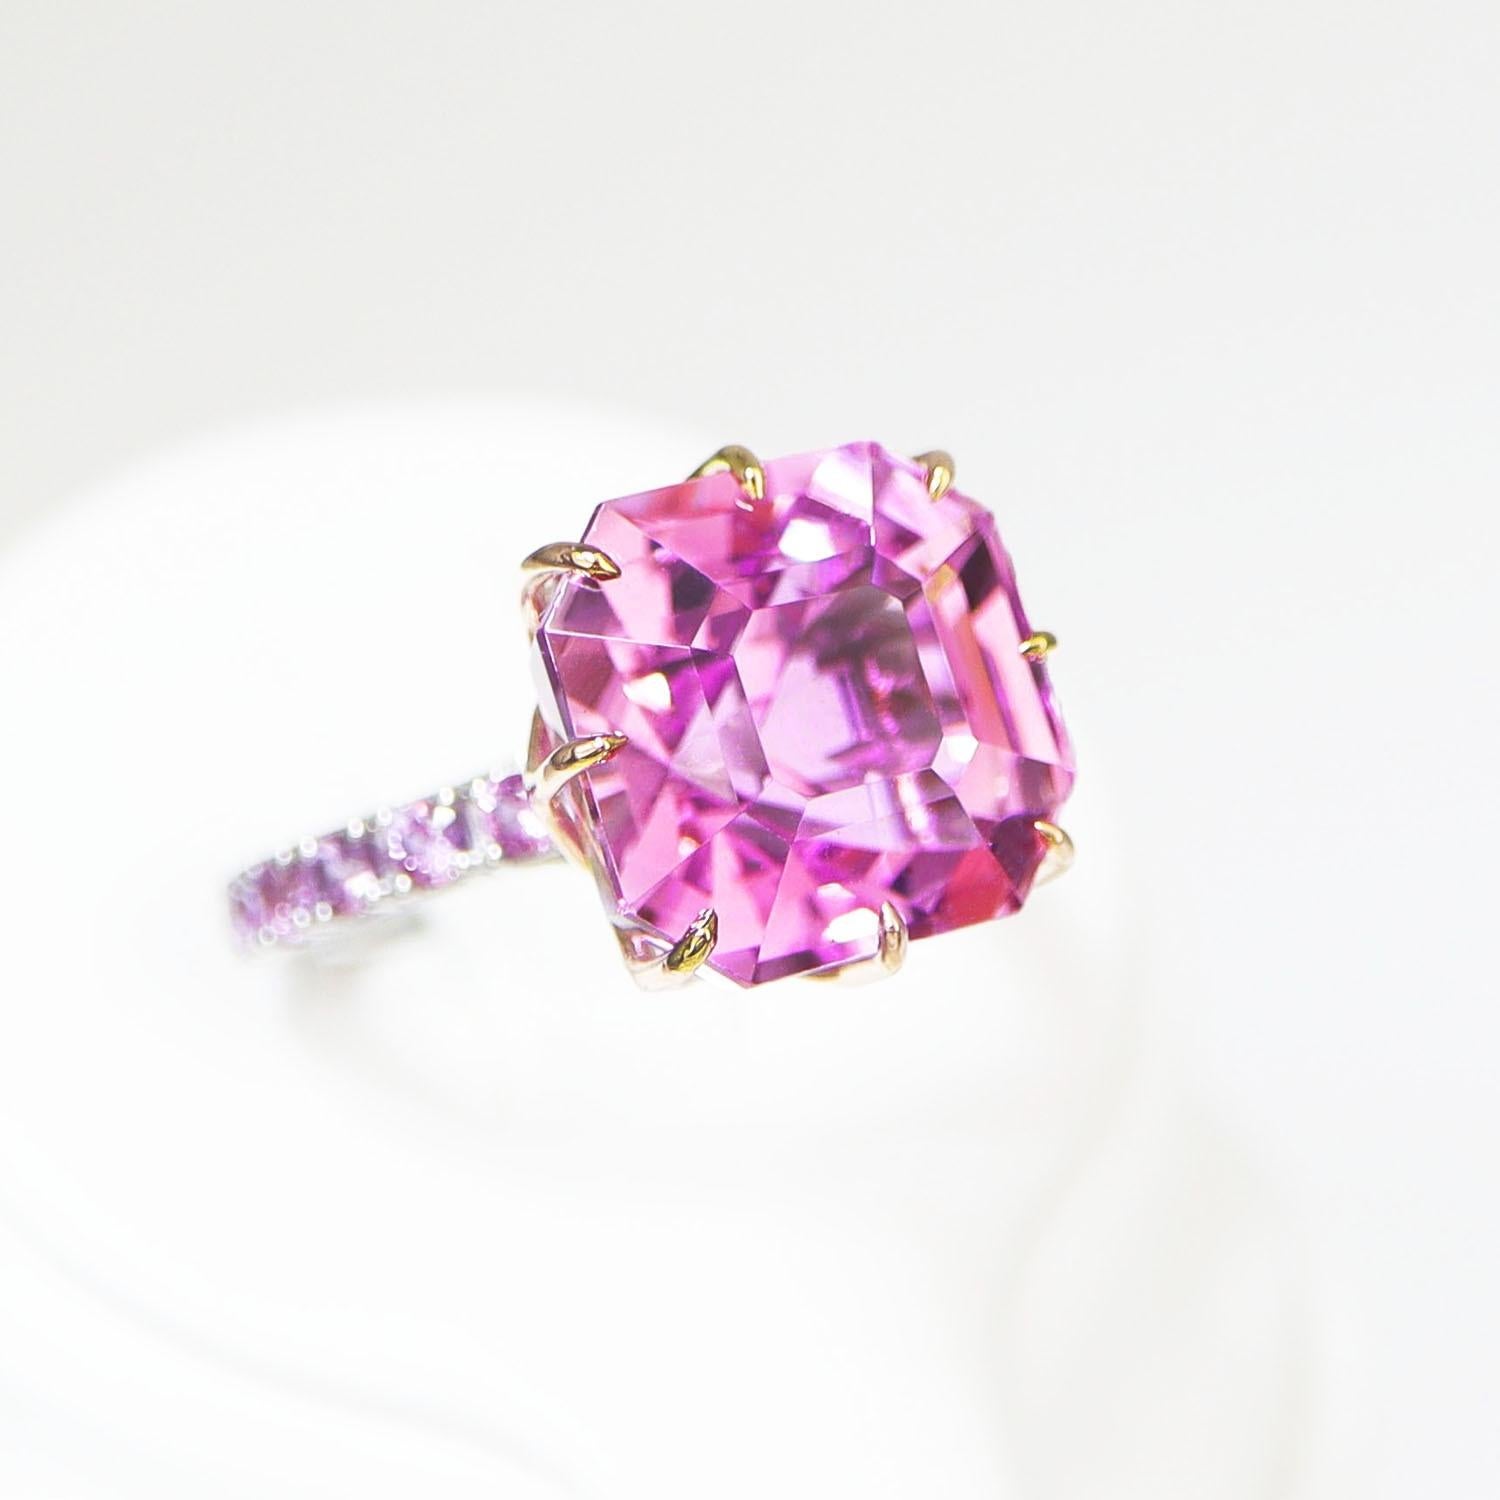 Contemporary IGI 14K 14.45 Ct Kunzite&Pink Sapphires Antique Art Deco Style Engagement Ring